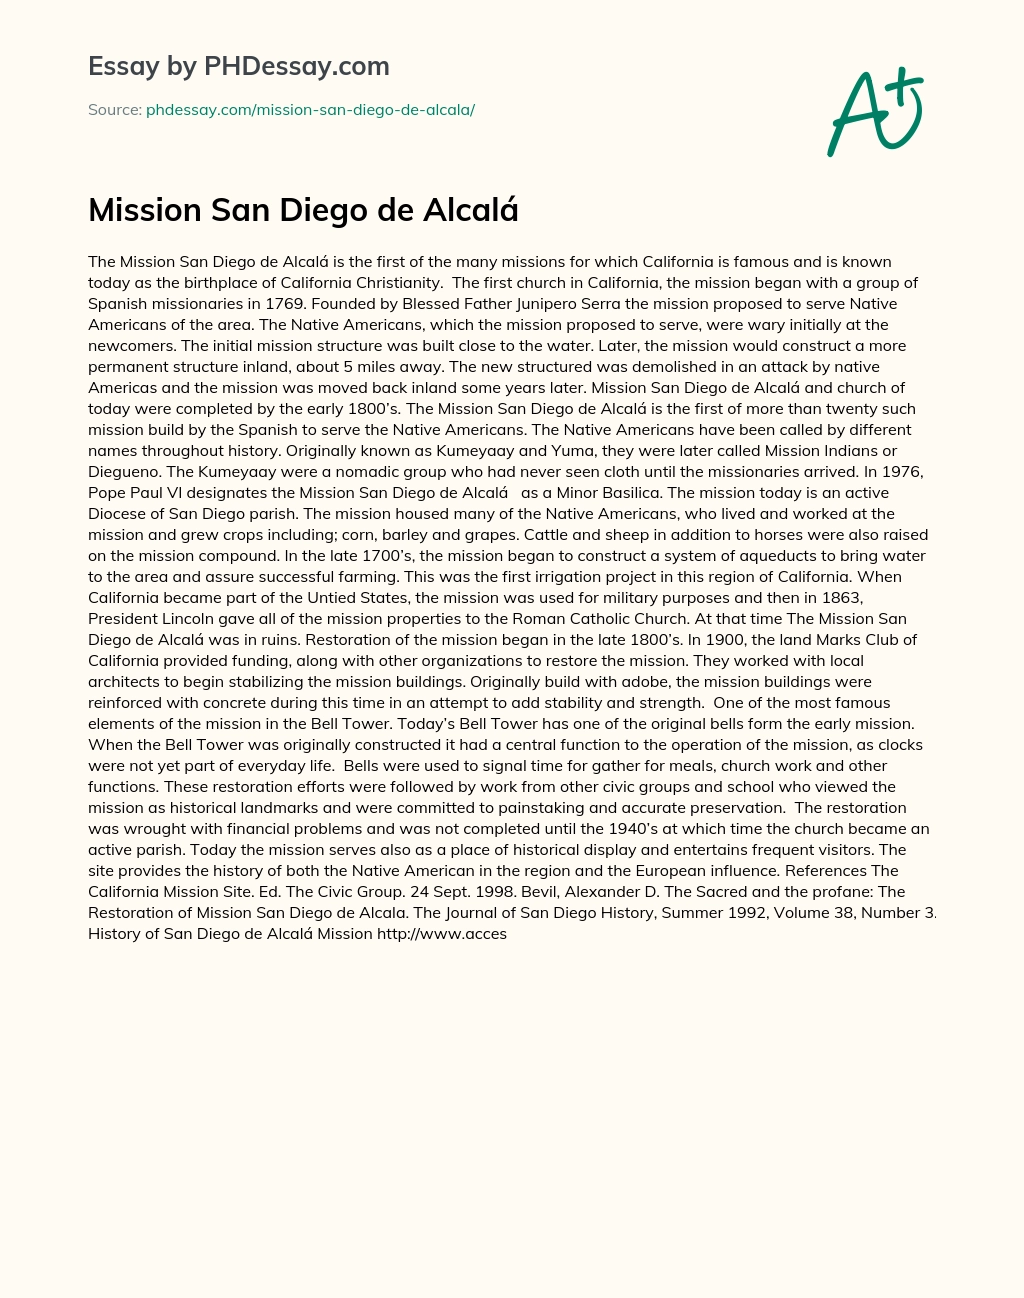 Mission San Diego de Alcalá essay